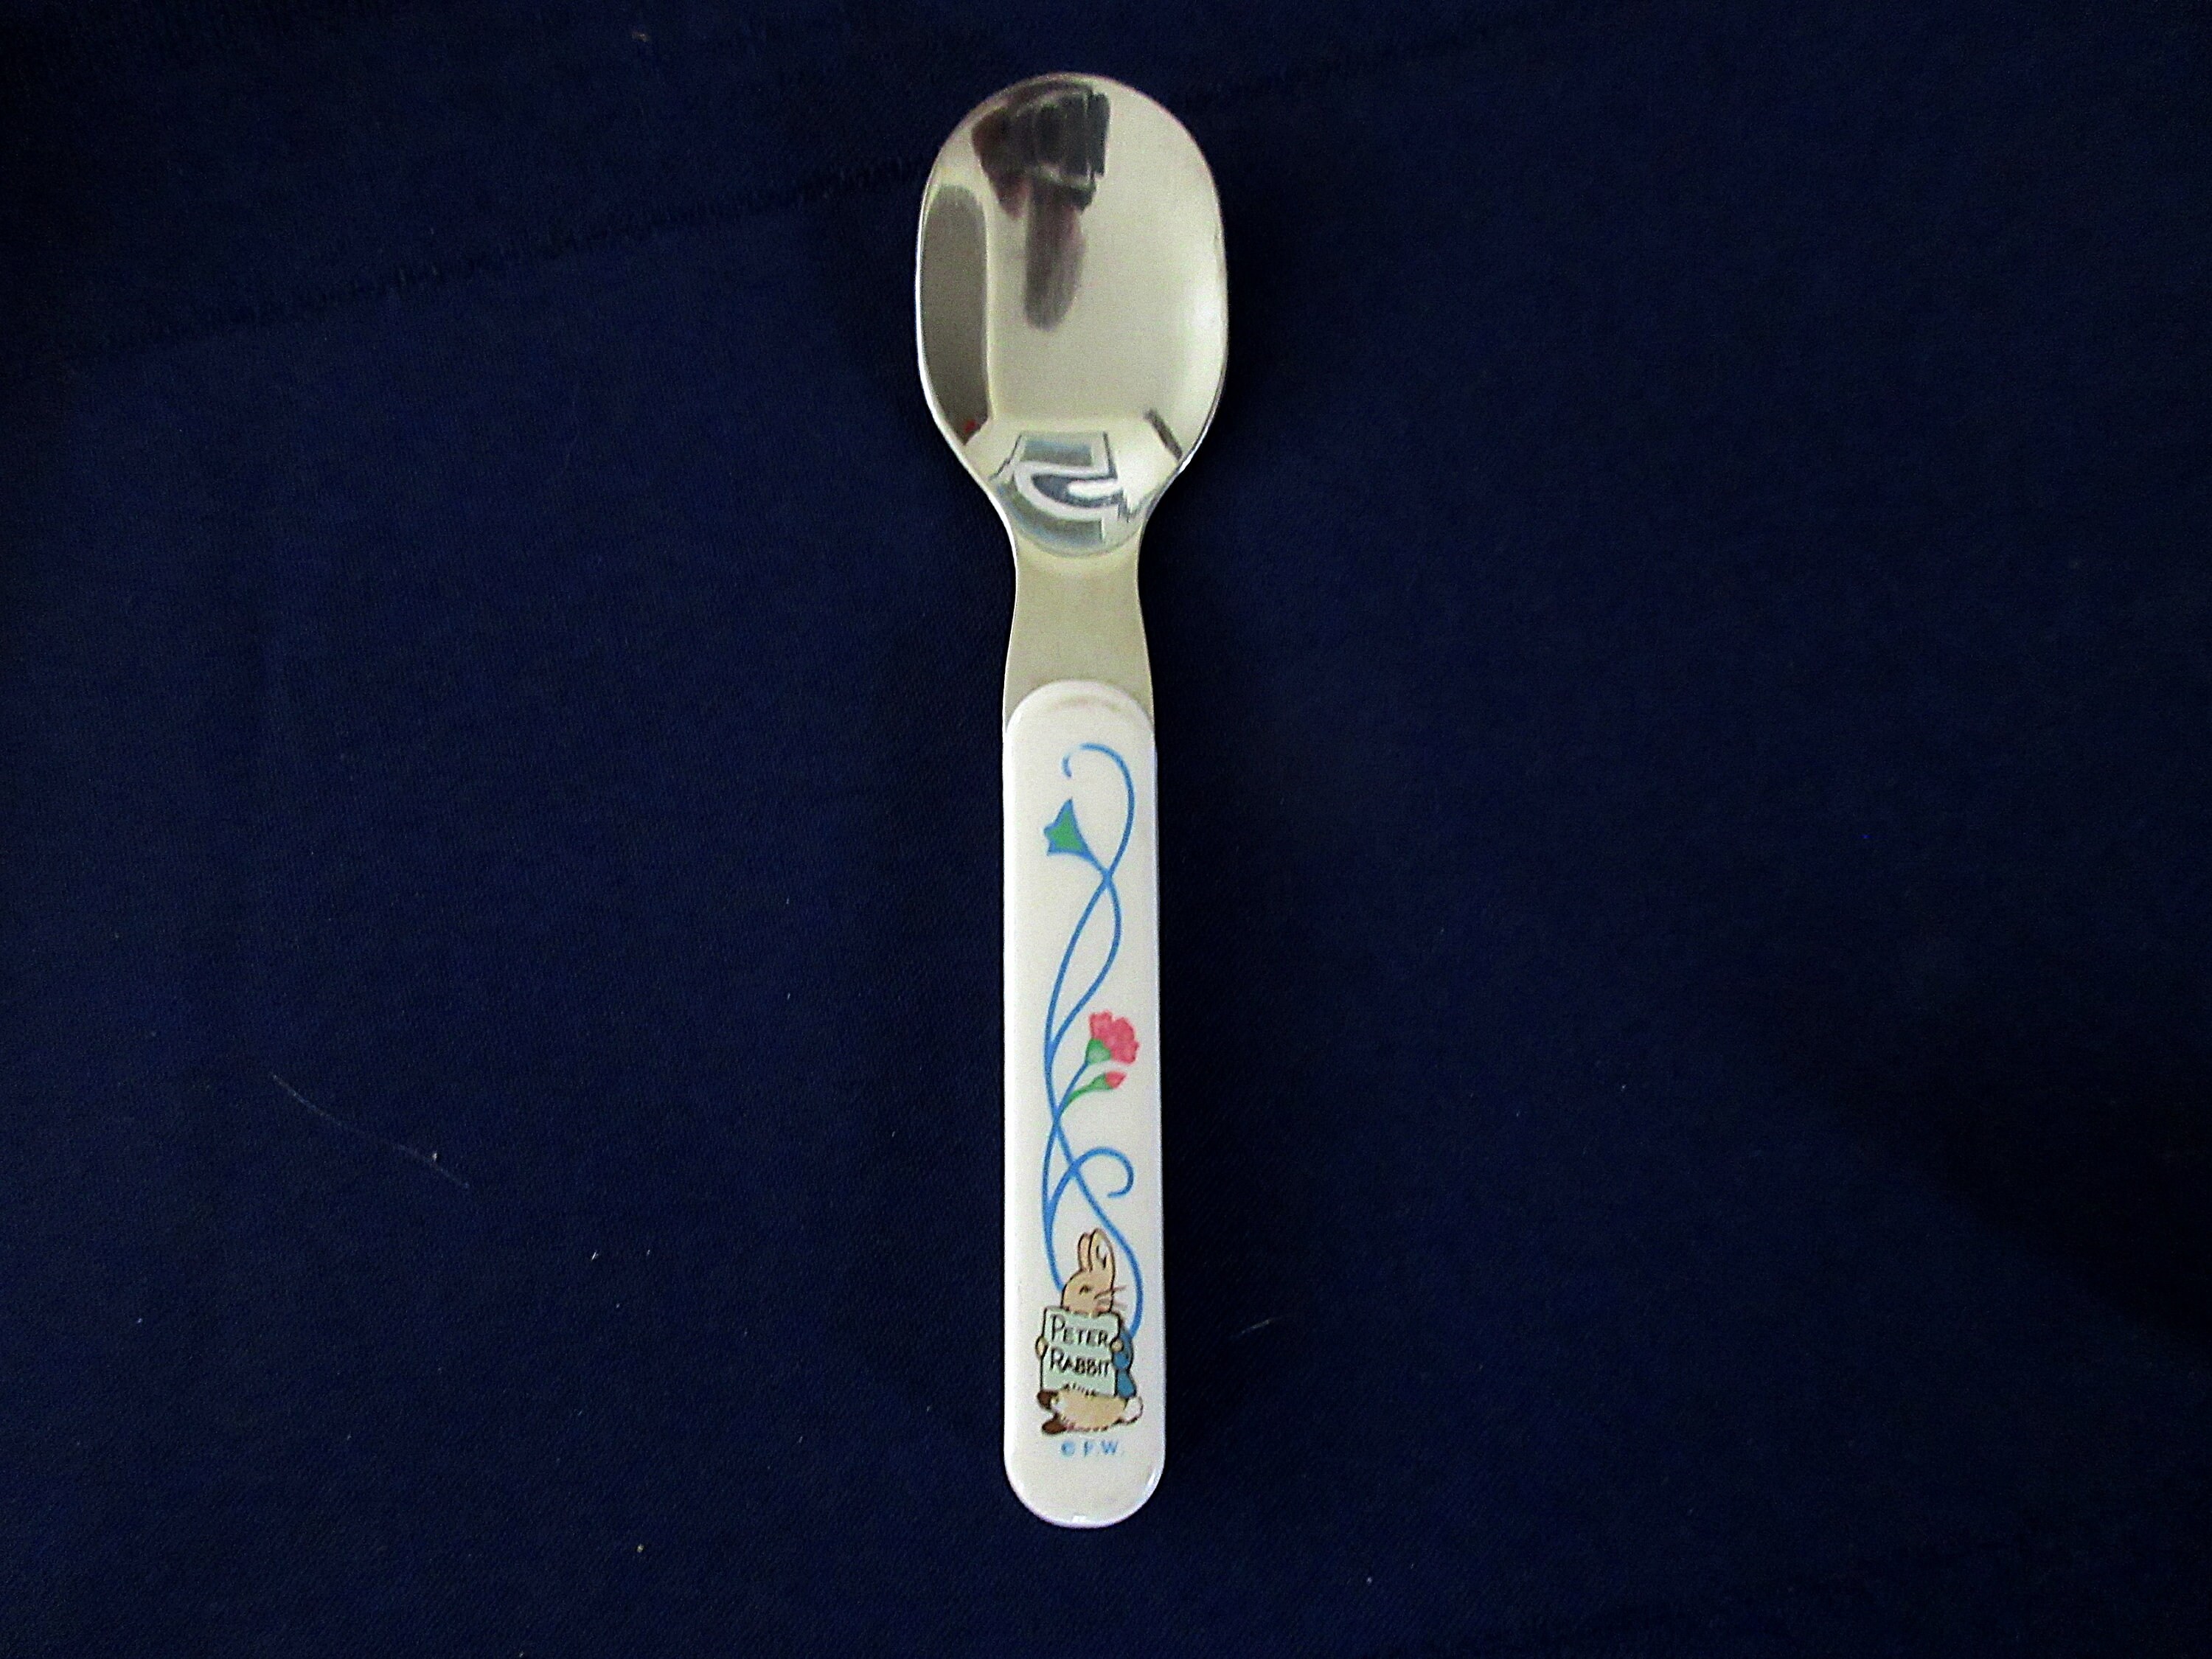 Oneida Peter Rabbit Stainless Baby Spoon